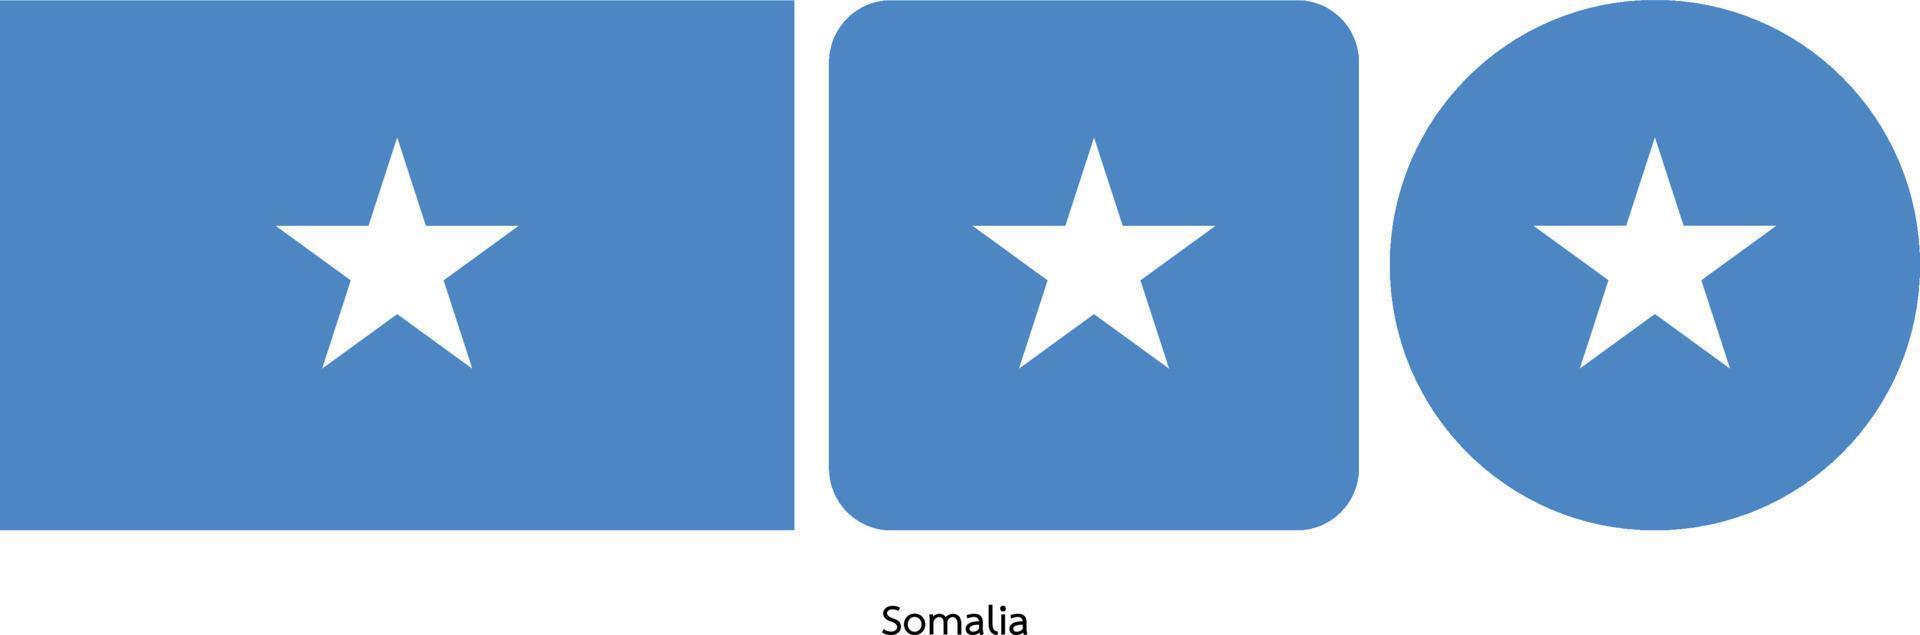 vlag van somalië, vectorillustratie vector